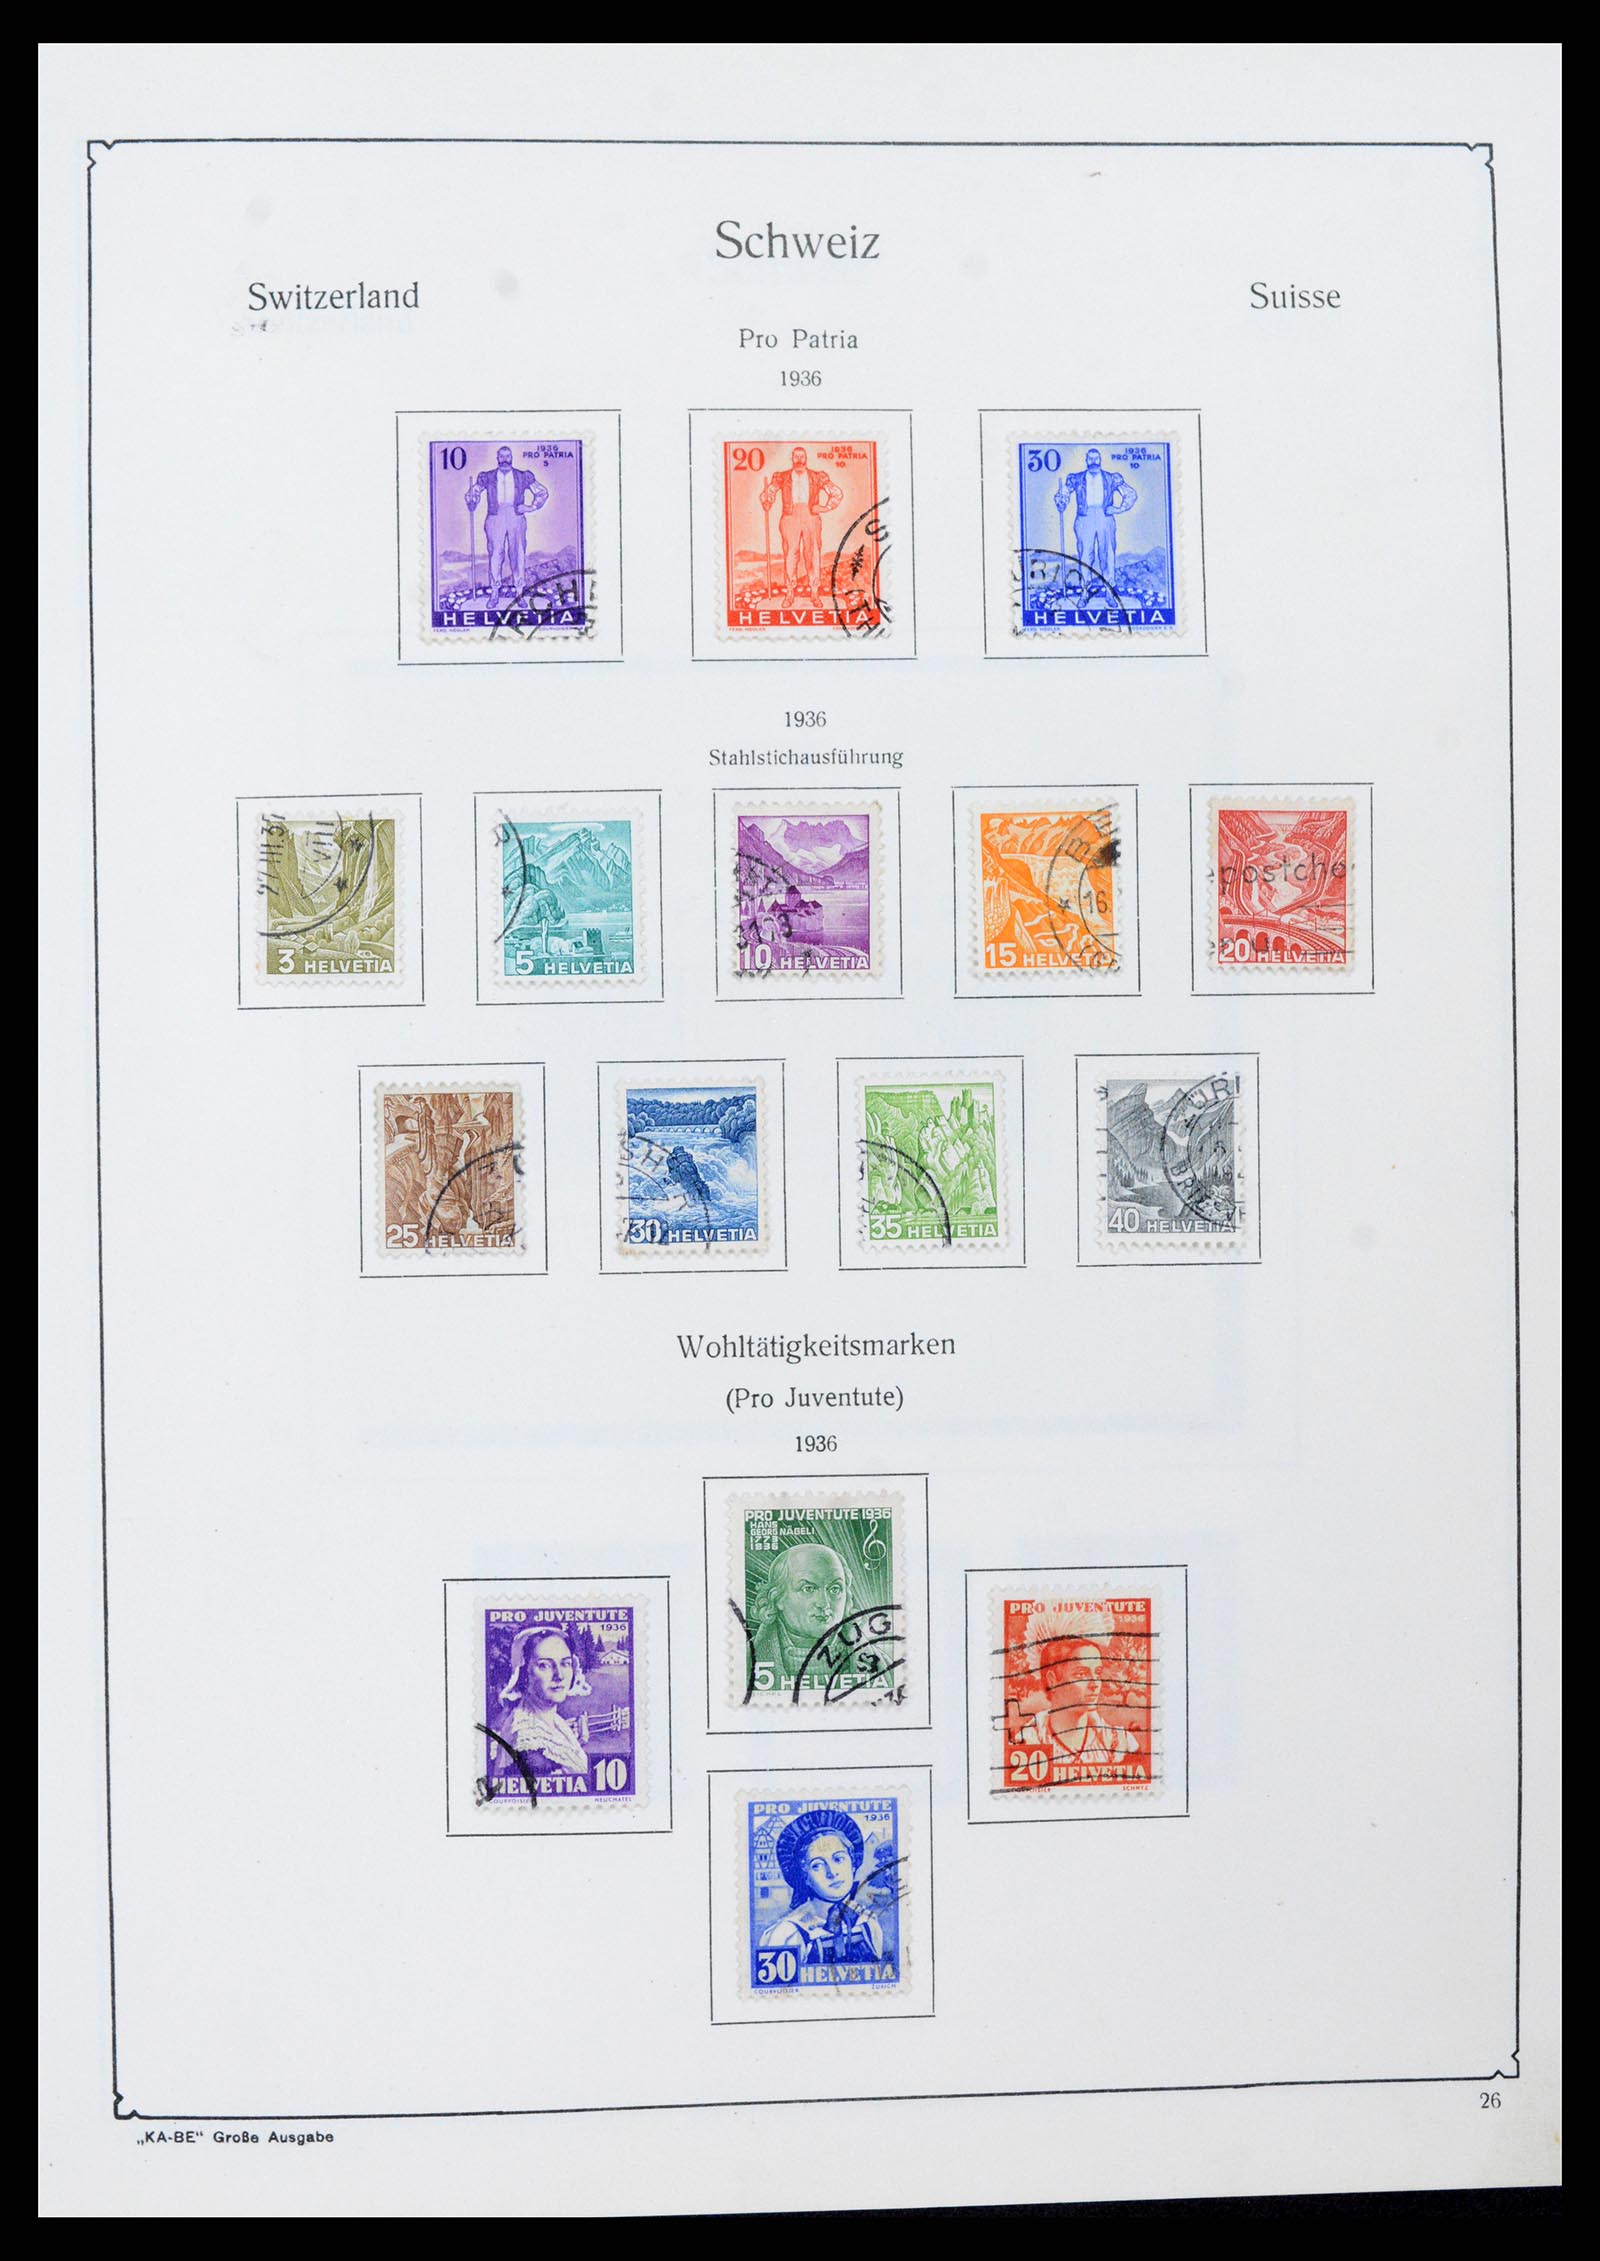 37588 025 - Stamp collection 37588 Switzerland 1854-1974.